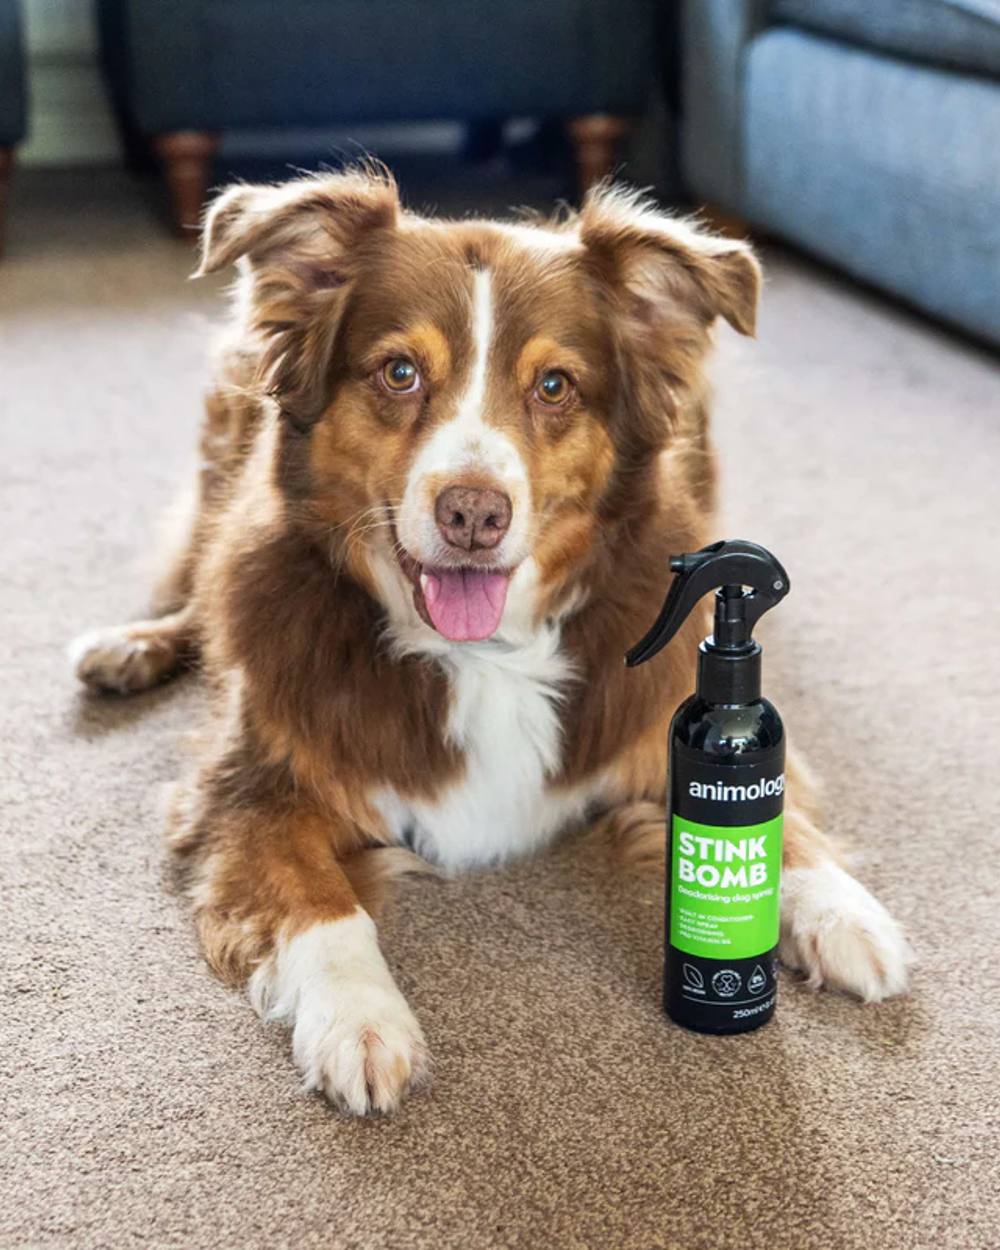 Animology Stink Bomb Deodorising Spray 250ml with dog in background